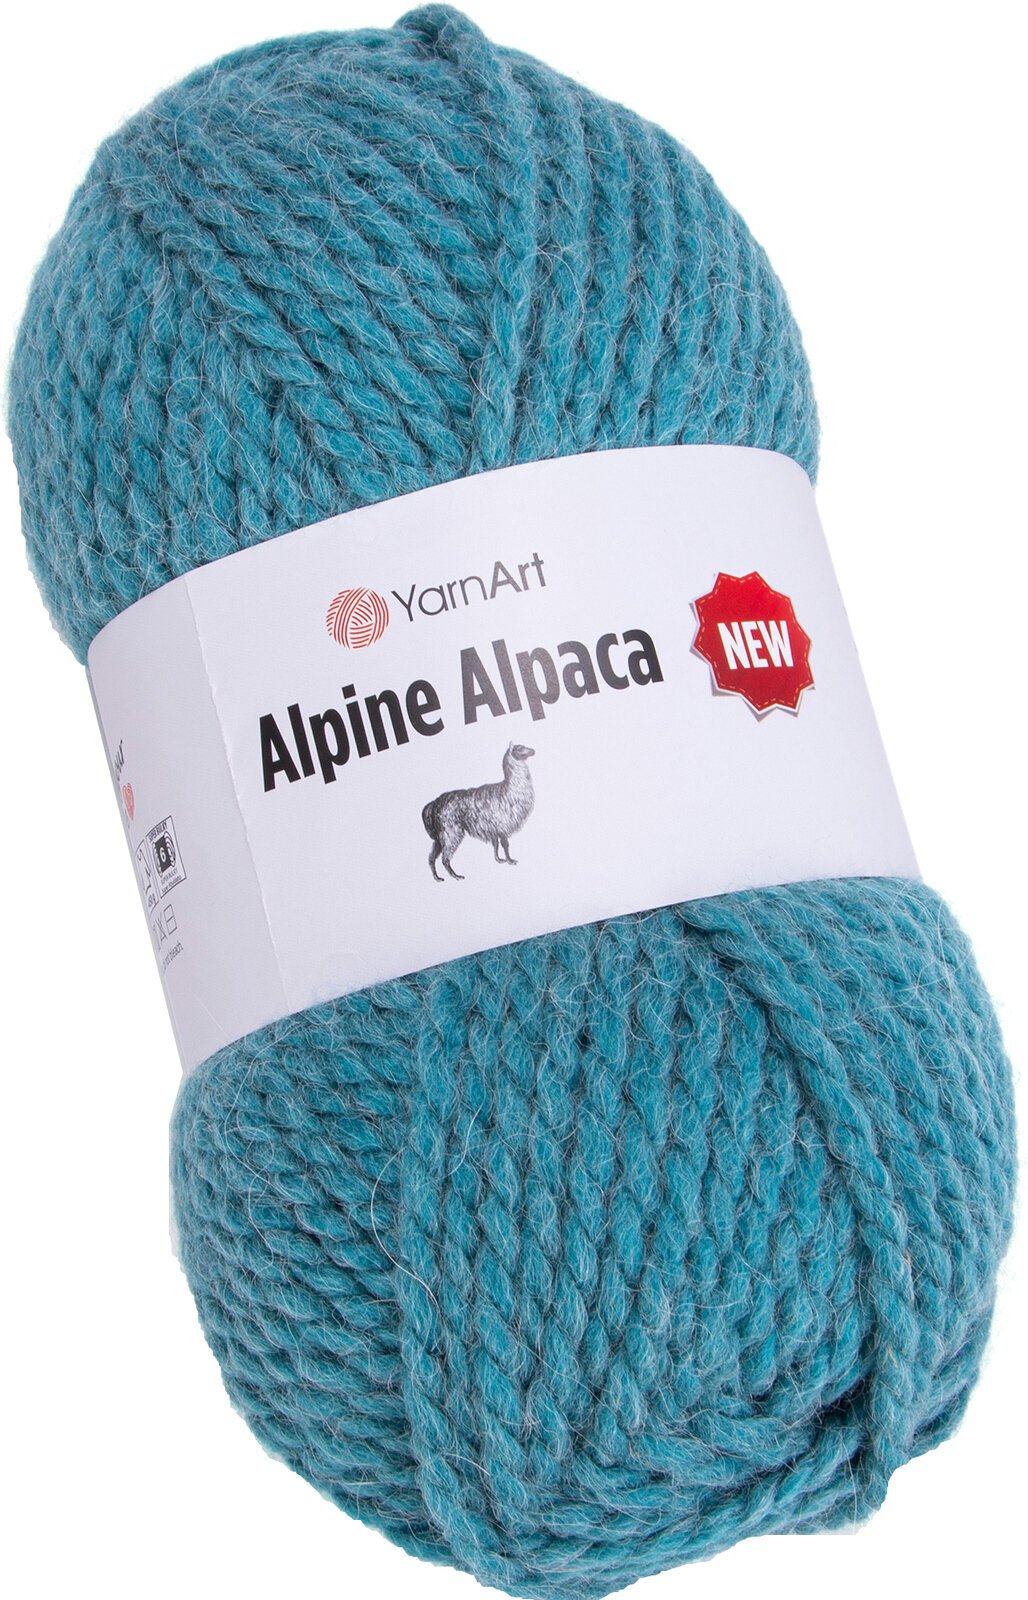 Strickgarn Yarn Art Alpine Alpaca New 1450 Strickgarn